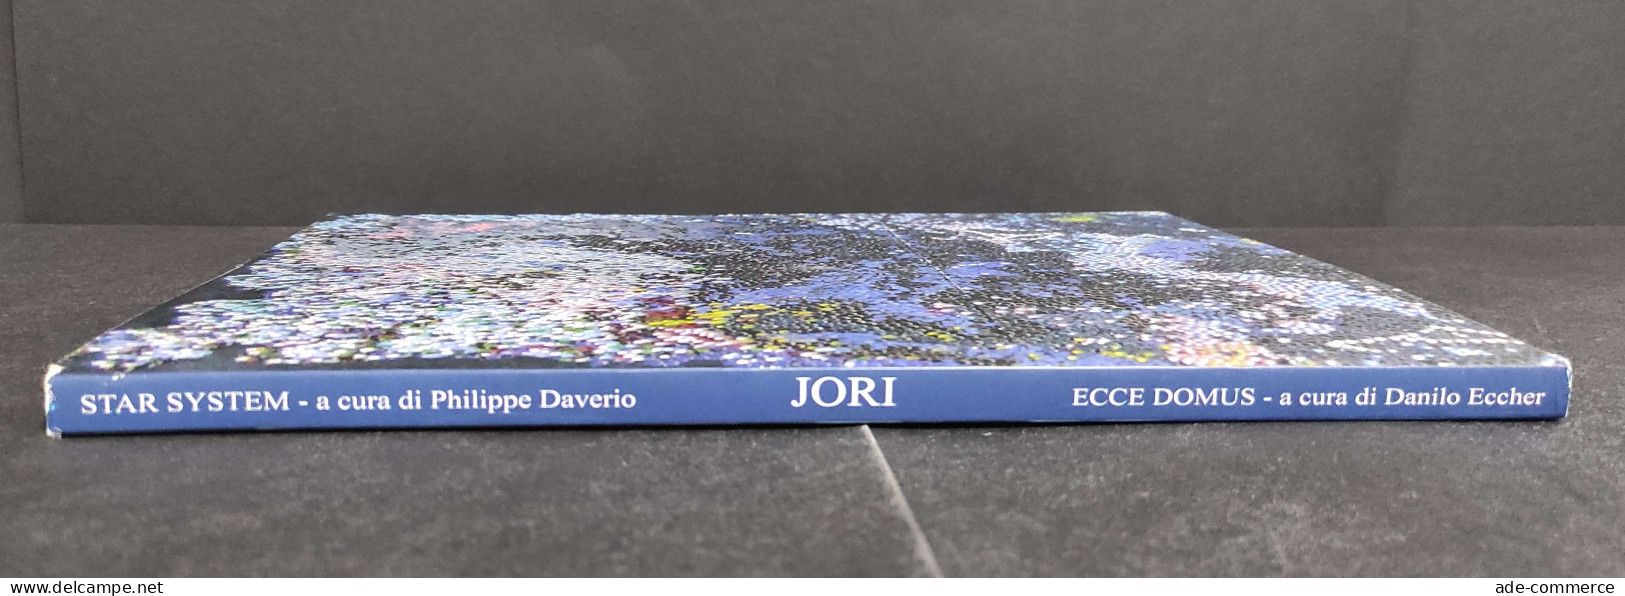 Marcello Jori - Ecce Domus - Star System - Galleria Goethe - Arts, Antiquity